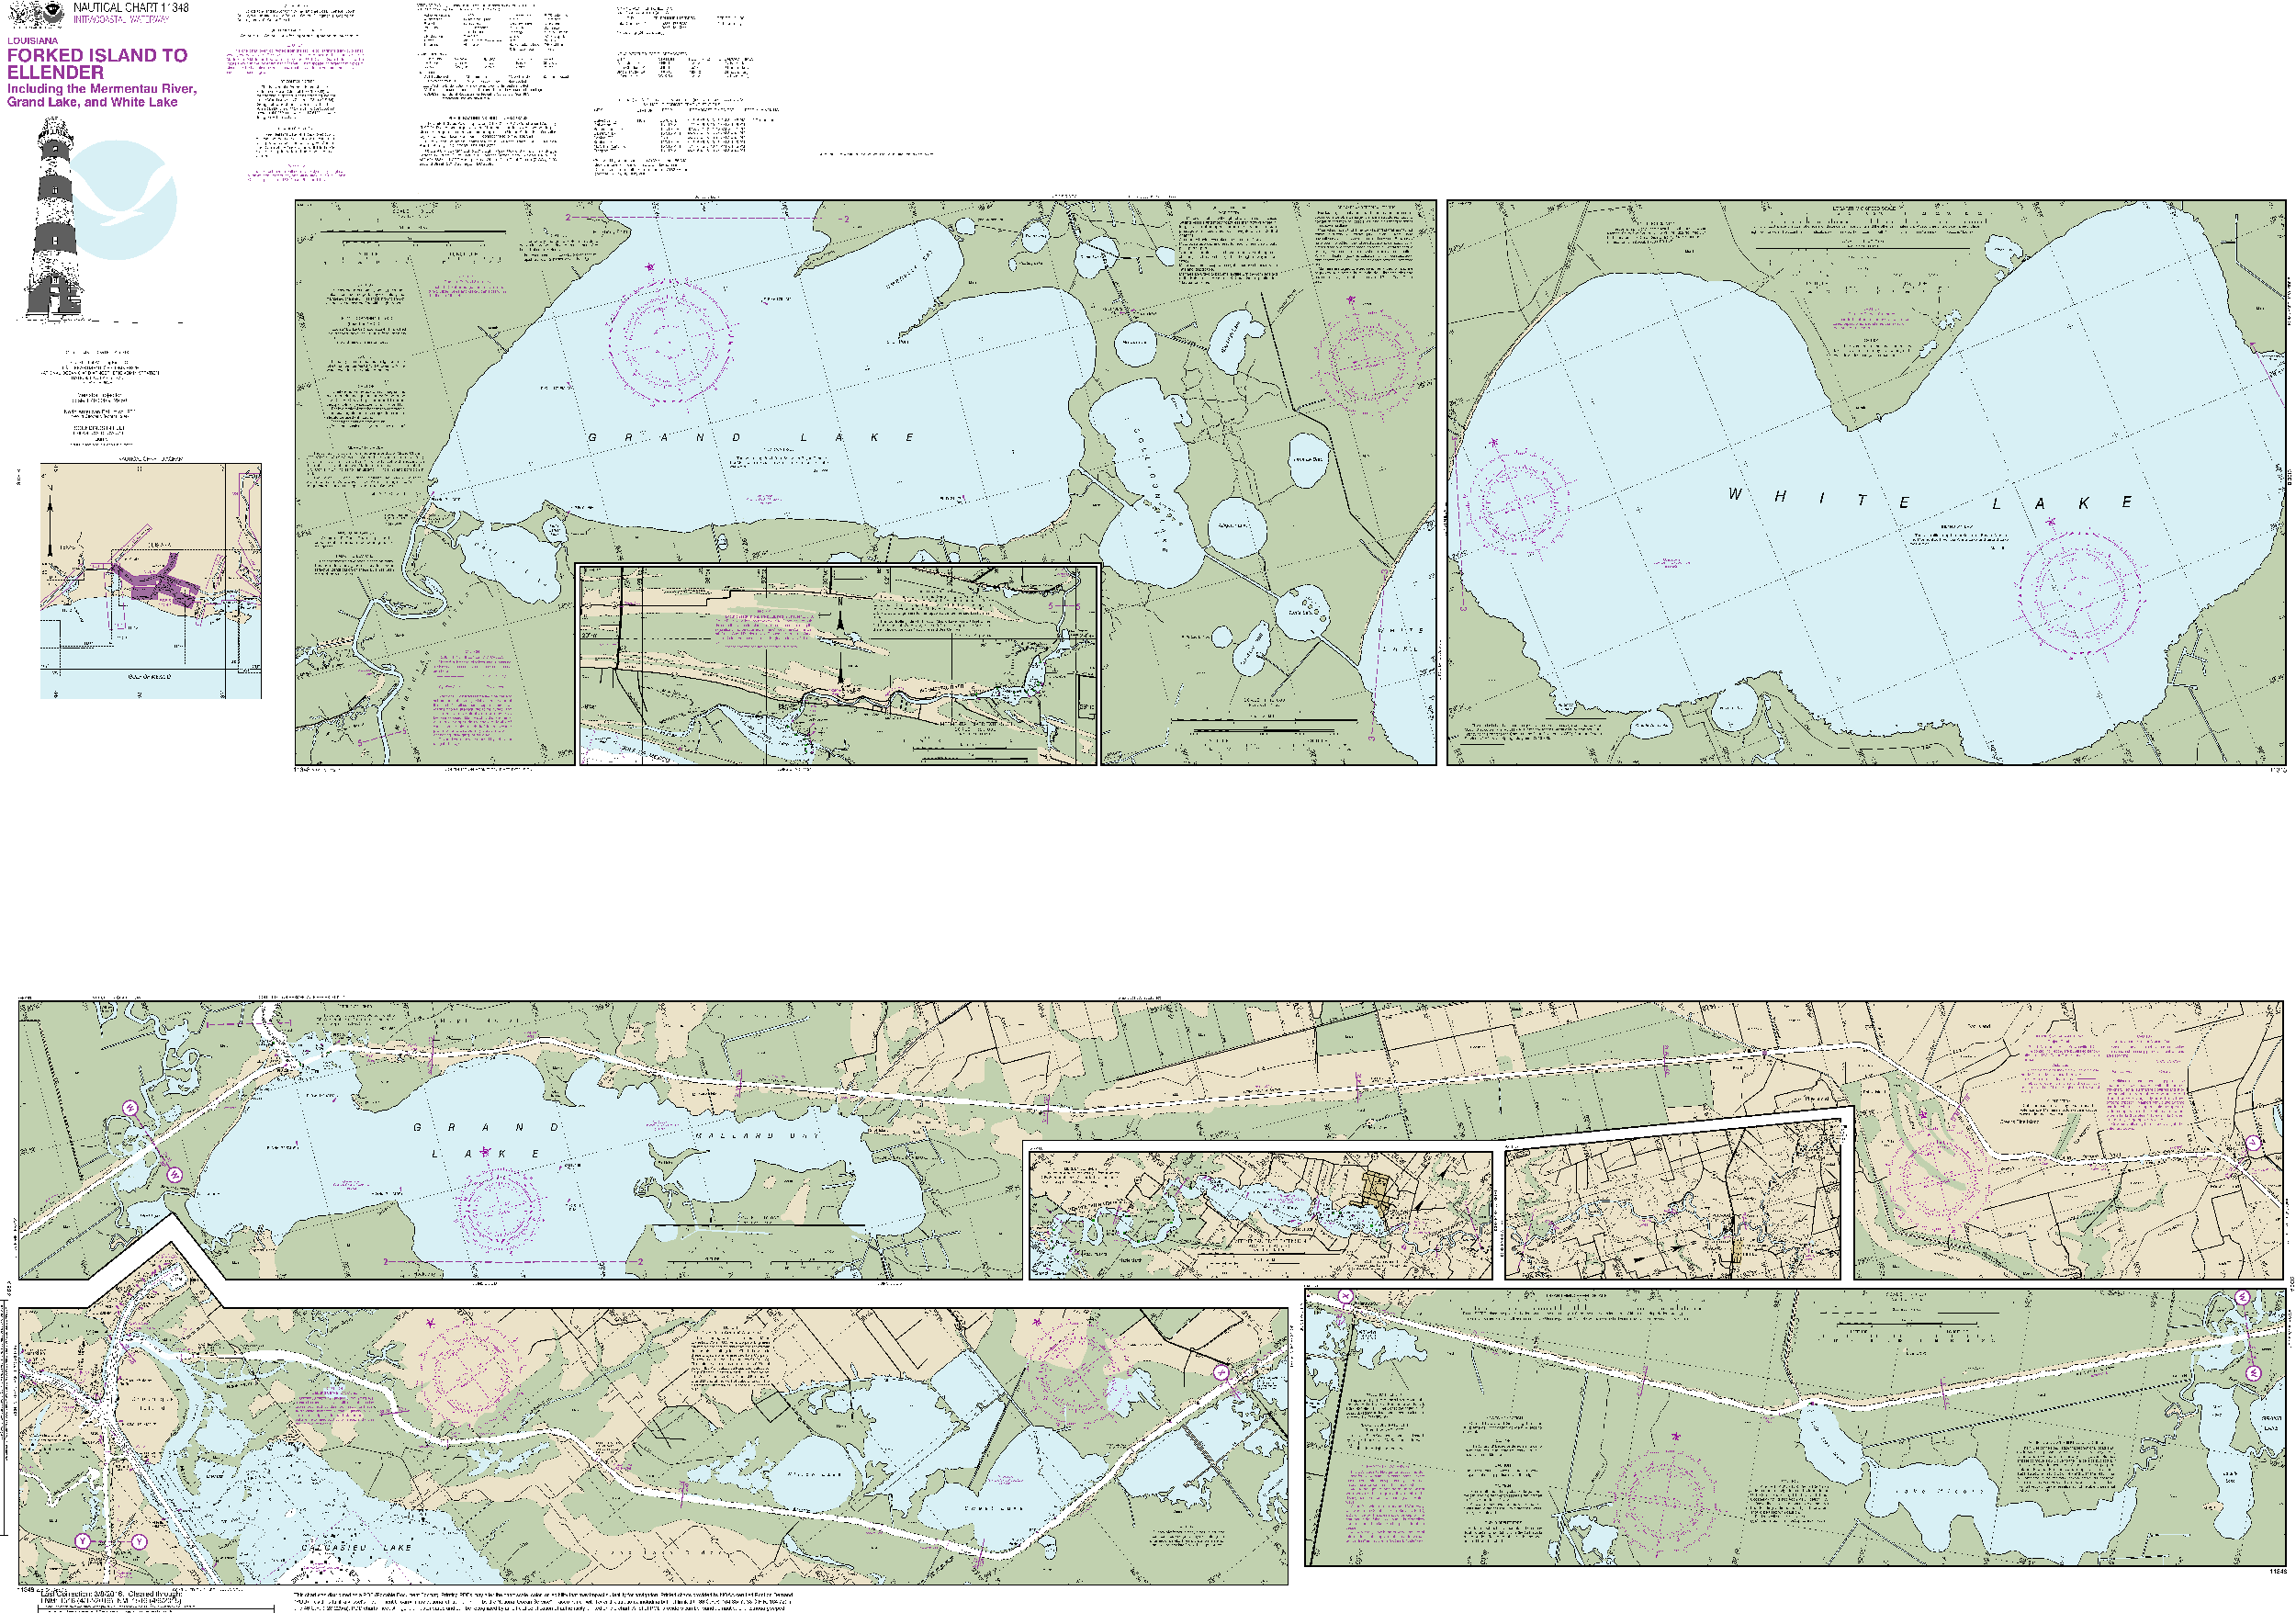 NOAA Nautical Chart 11348: Intracoastal Waterway Forked Island to Ellender, including the Mermantau River, Grand Lake and White Lake